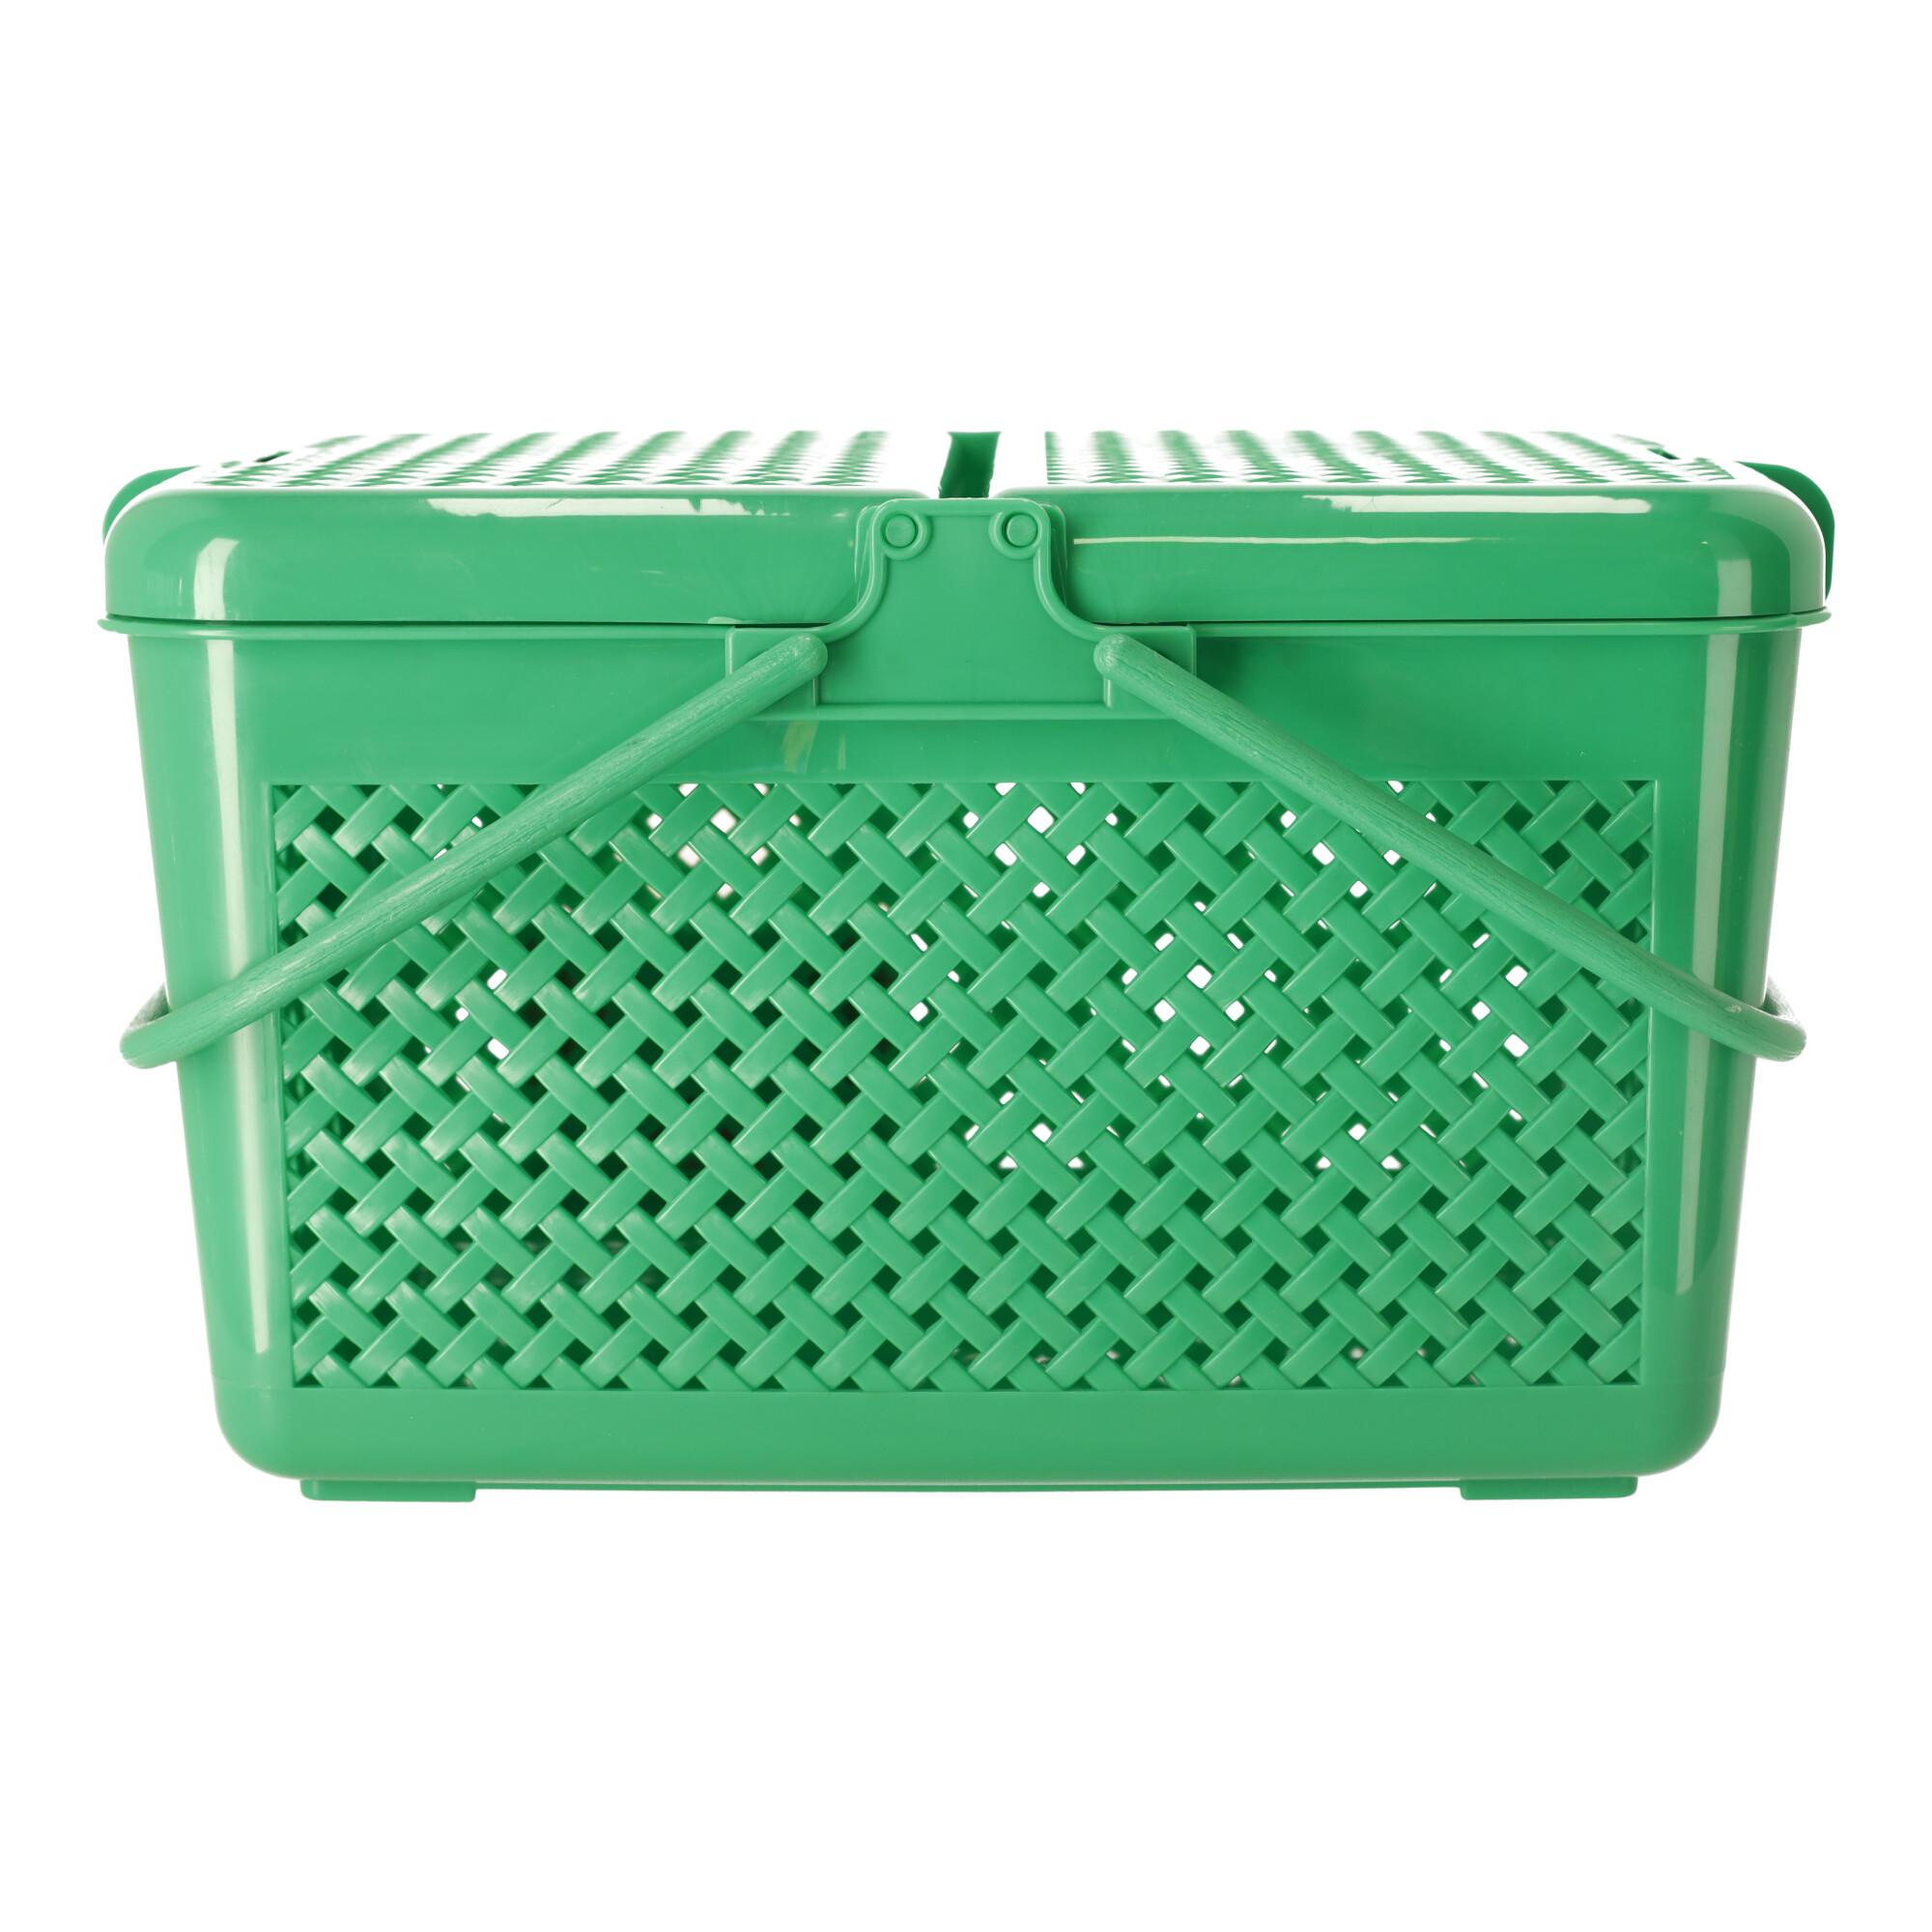 Rectangular picnic basket lockable, POLISH PRODUCT